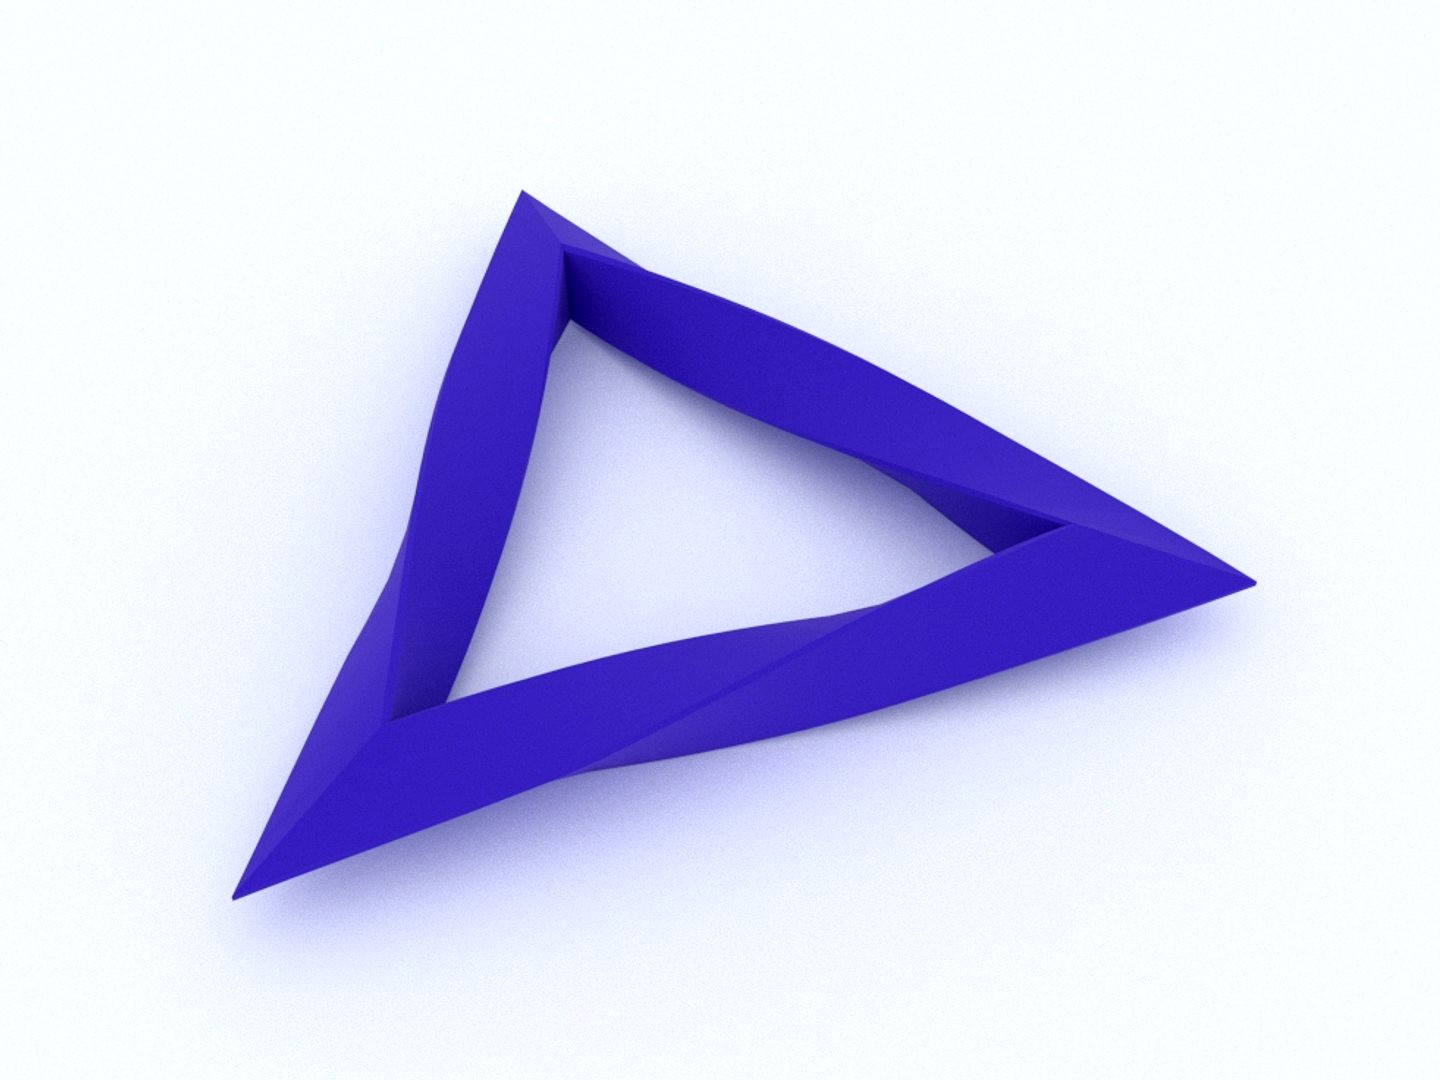 Twisted triangle